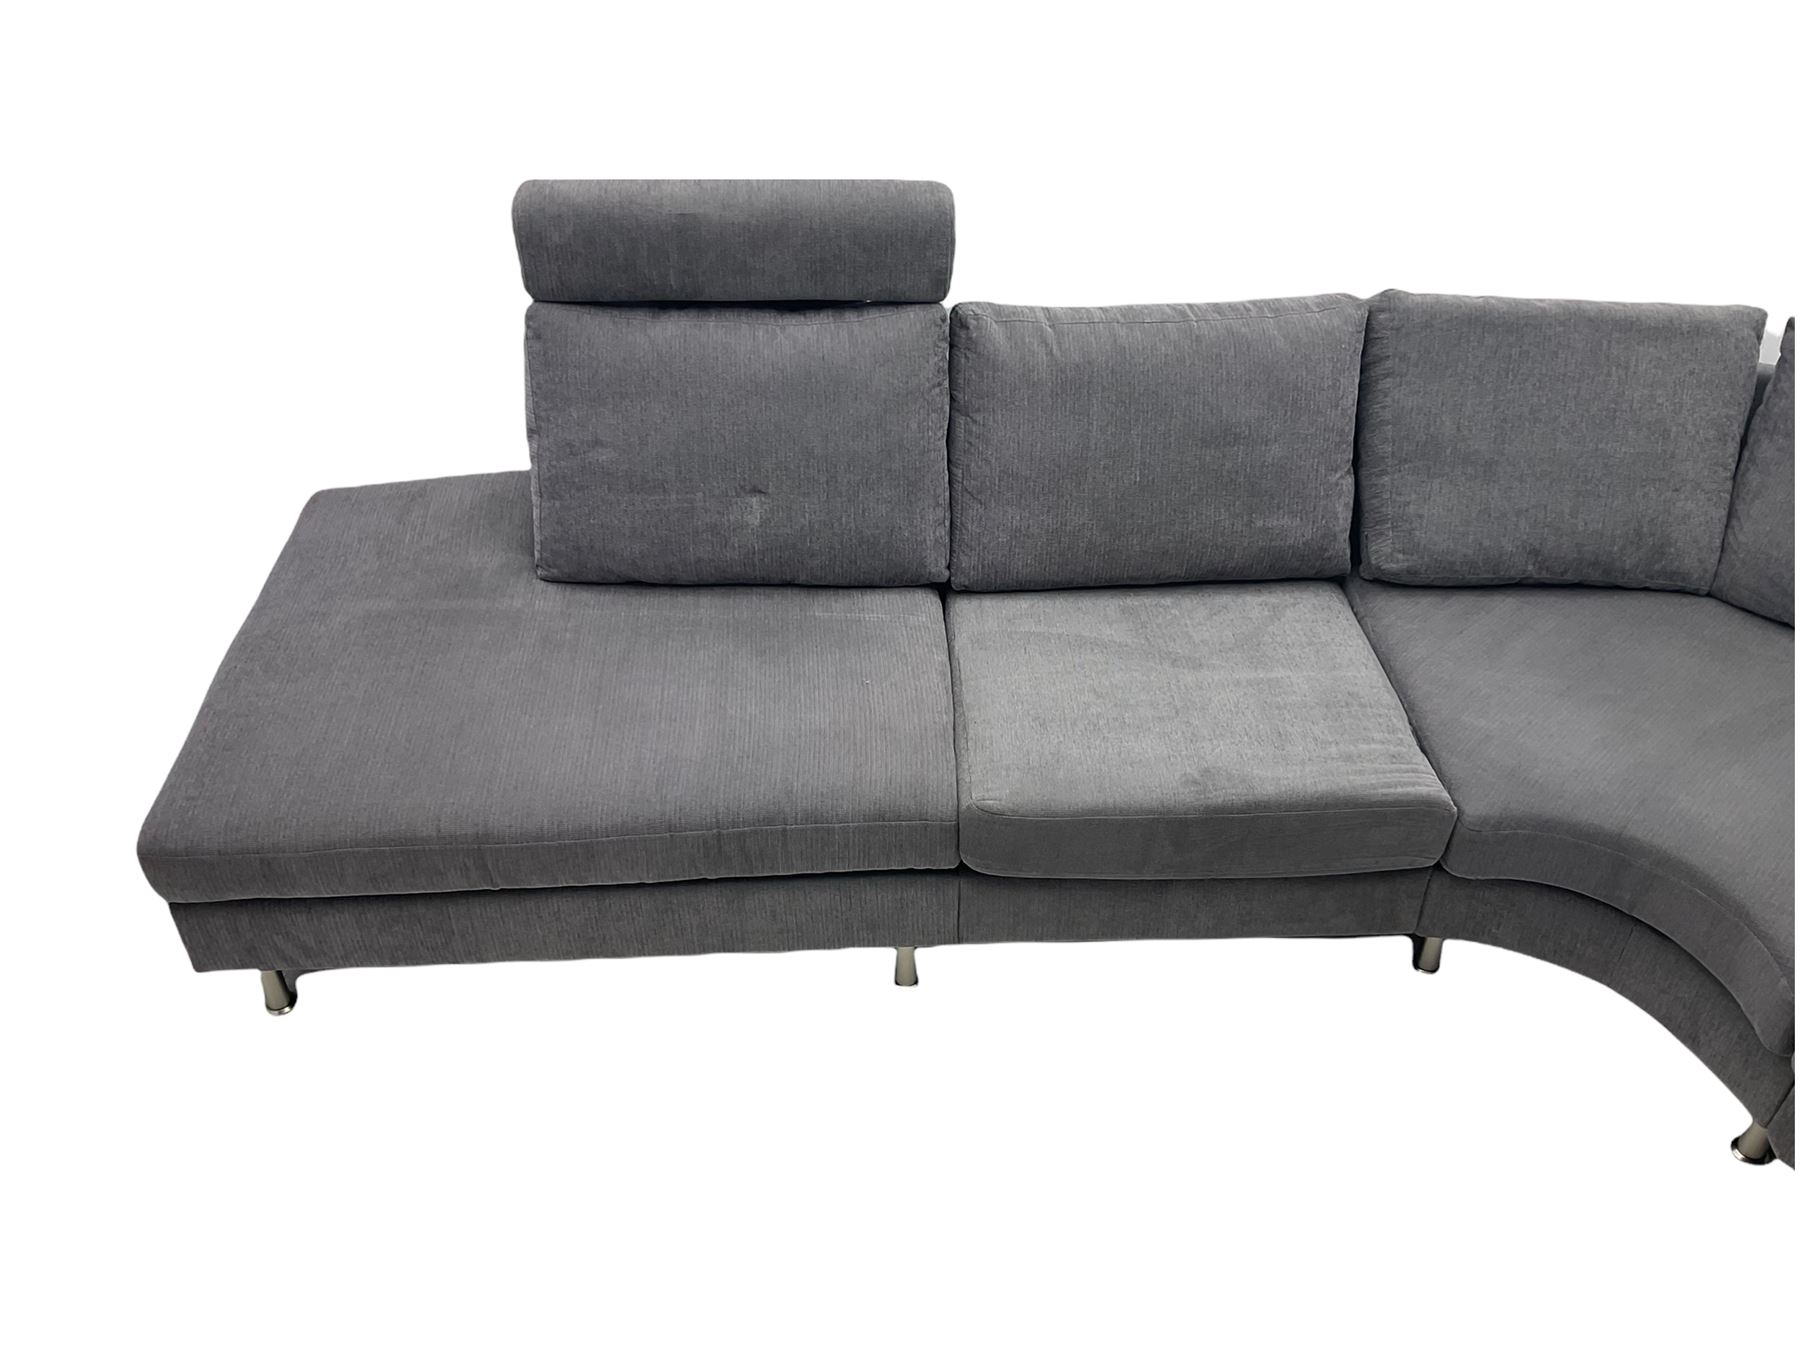 BoConcept 'Indivi 2' corner lounge sofa in grey Matera fabric - Image 5 of 8